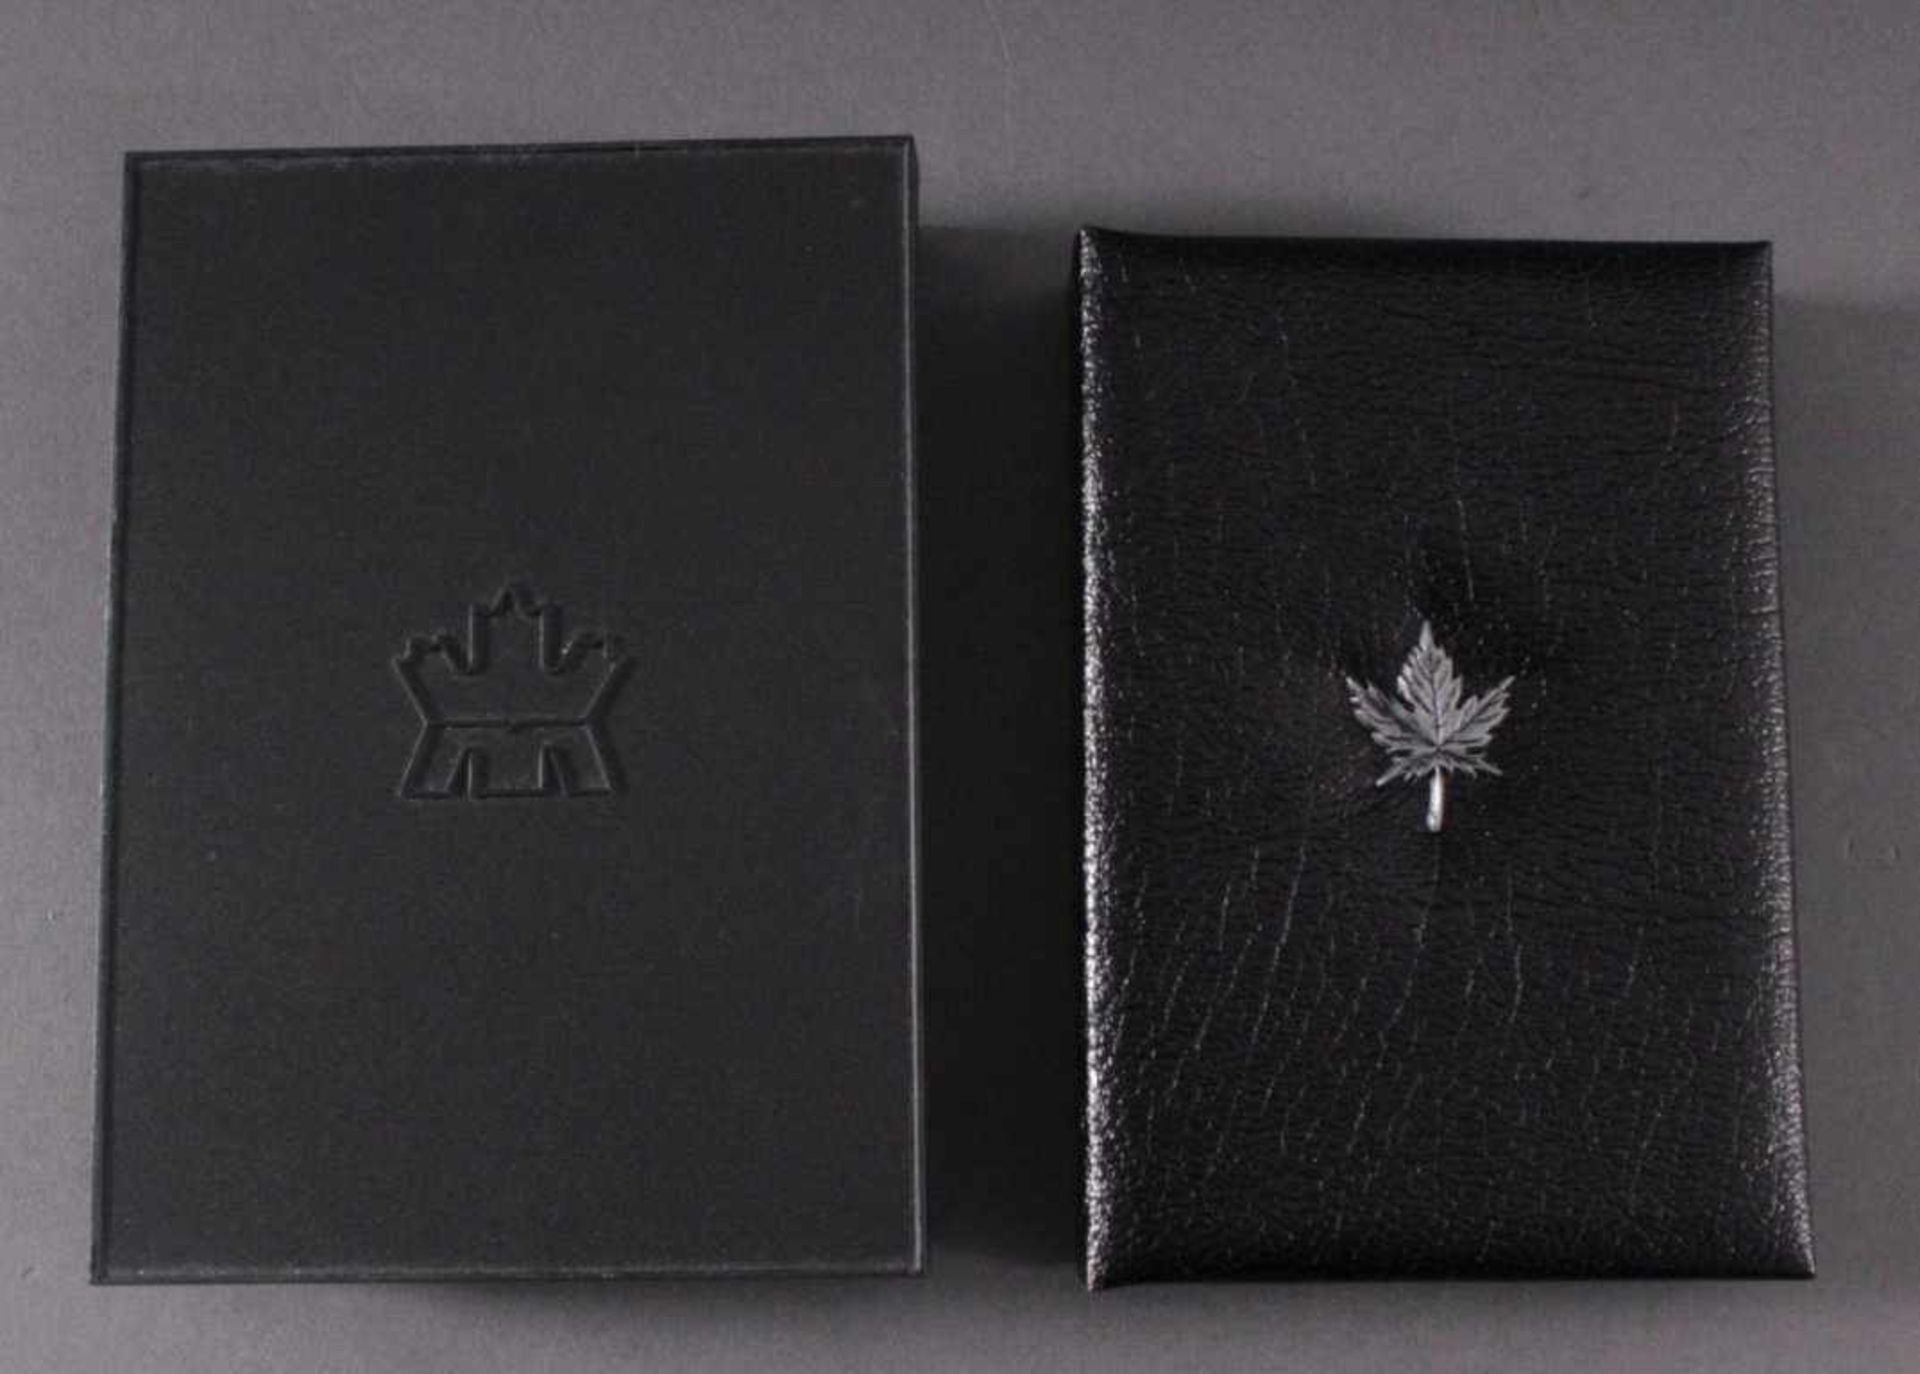 KMS Kanada 1987 PPMit Silberdollar in originaler Verpackung der Royal CanadianMint. - Bild 3 aus 3